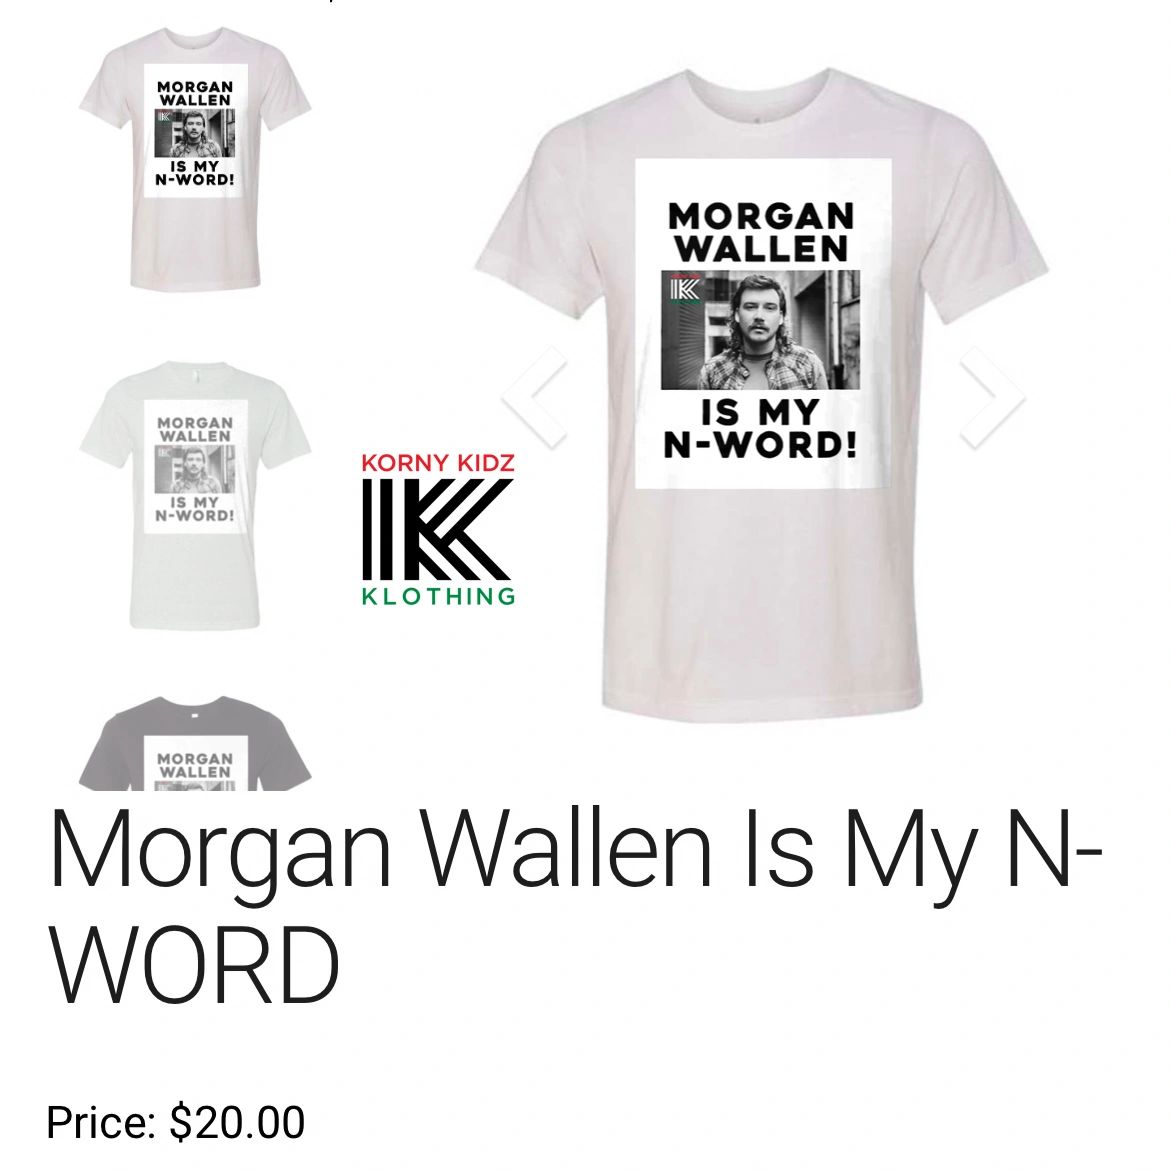 Morgan Wallen Is My N-WORD T-Shirt